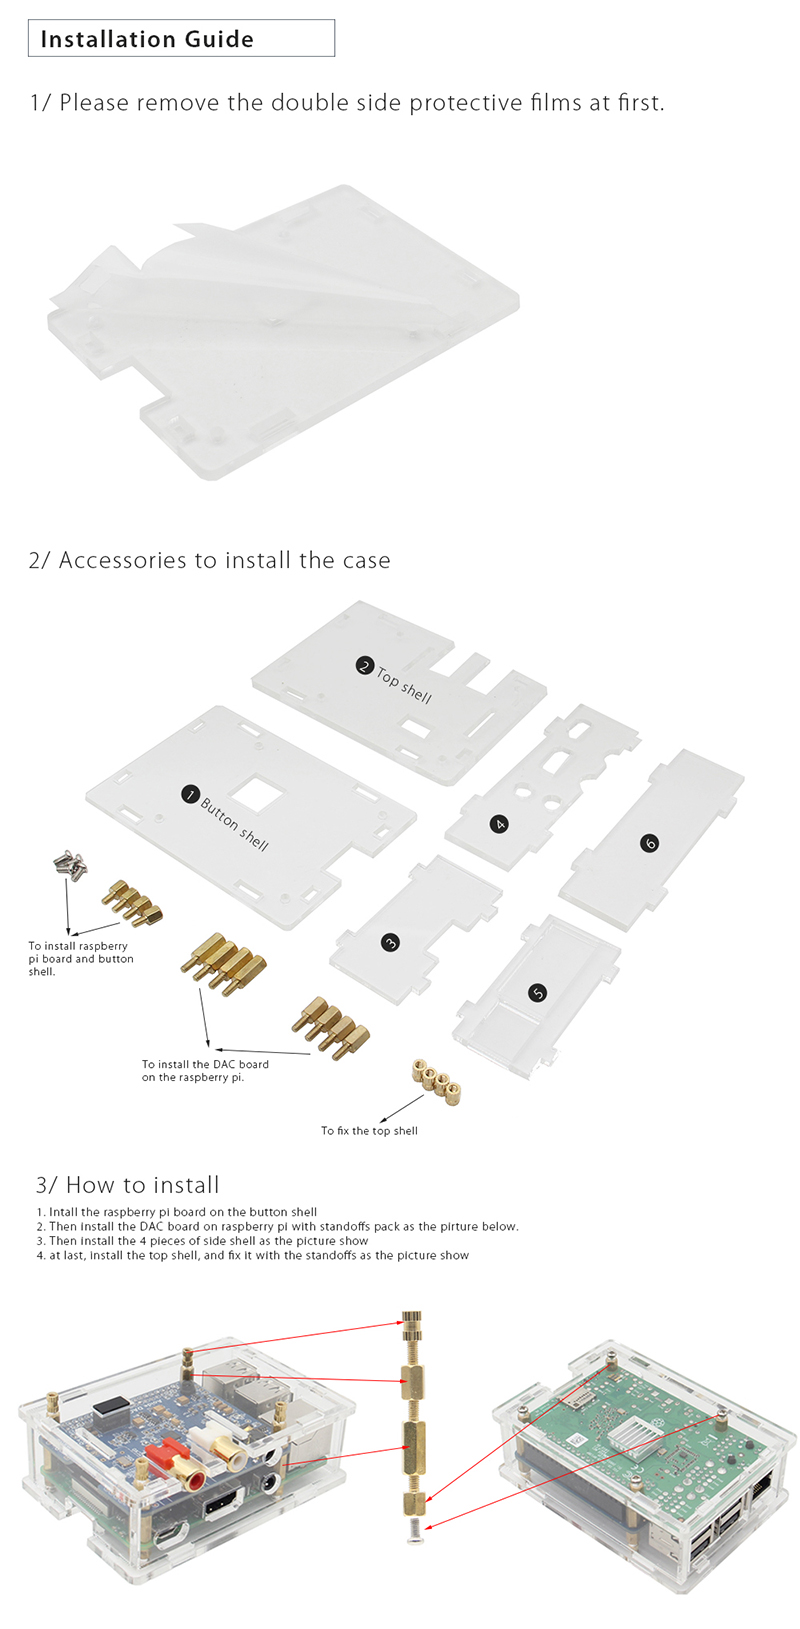 Transparent-Acrylic-Case-For-Raspberry-Pi-DAC-II-Hifi-Sound-Card-1336607